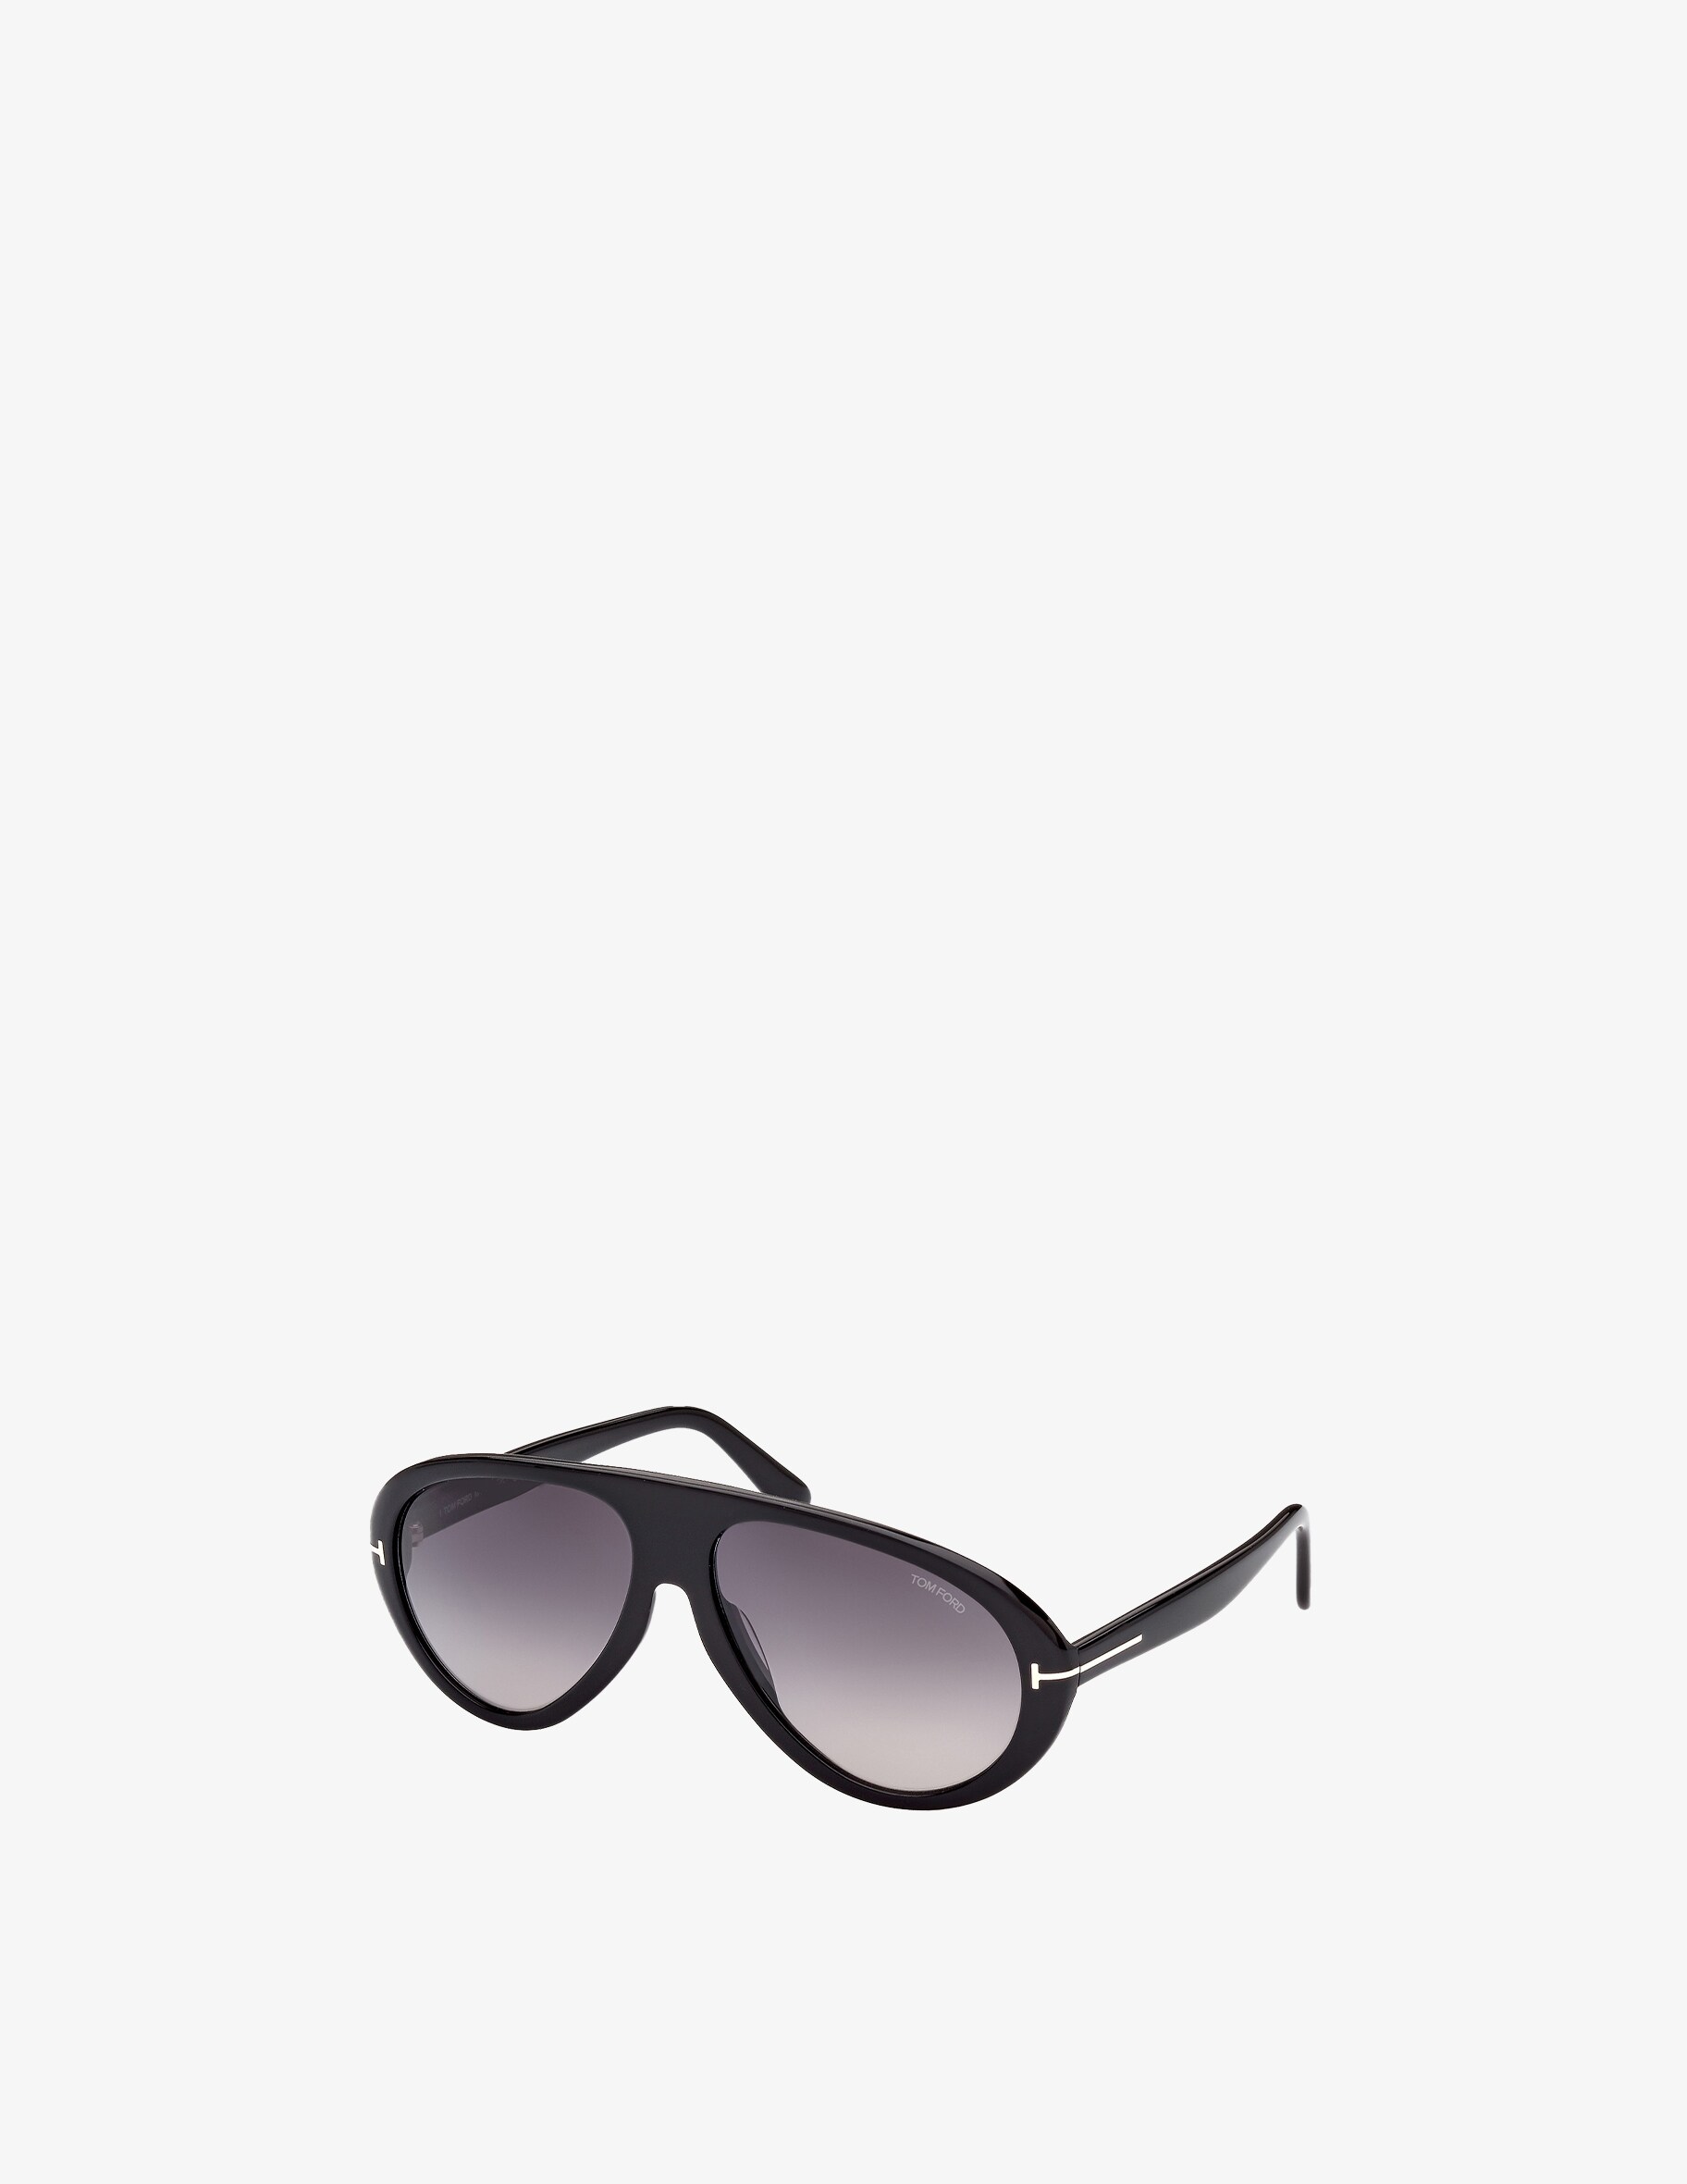 Солнцезащитные очки-авиаторы Tom Ford, цвет Nero / Black tom ford sunglasses